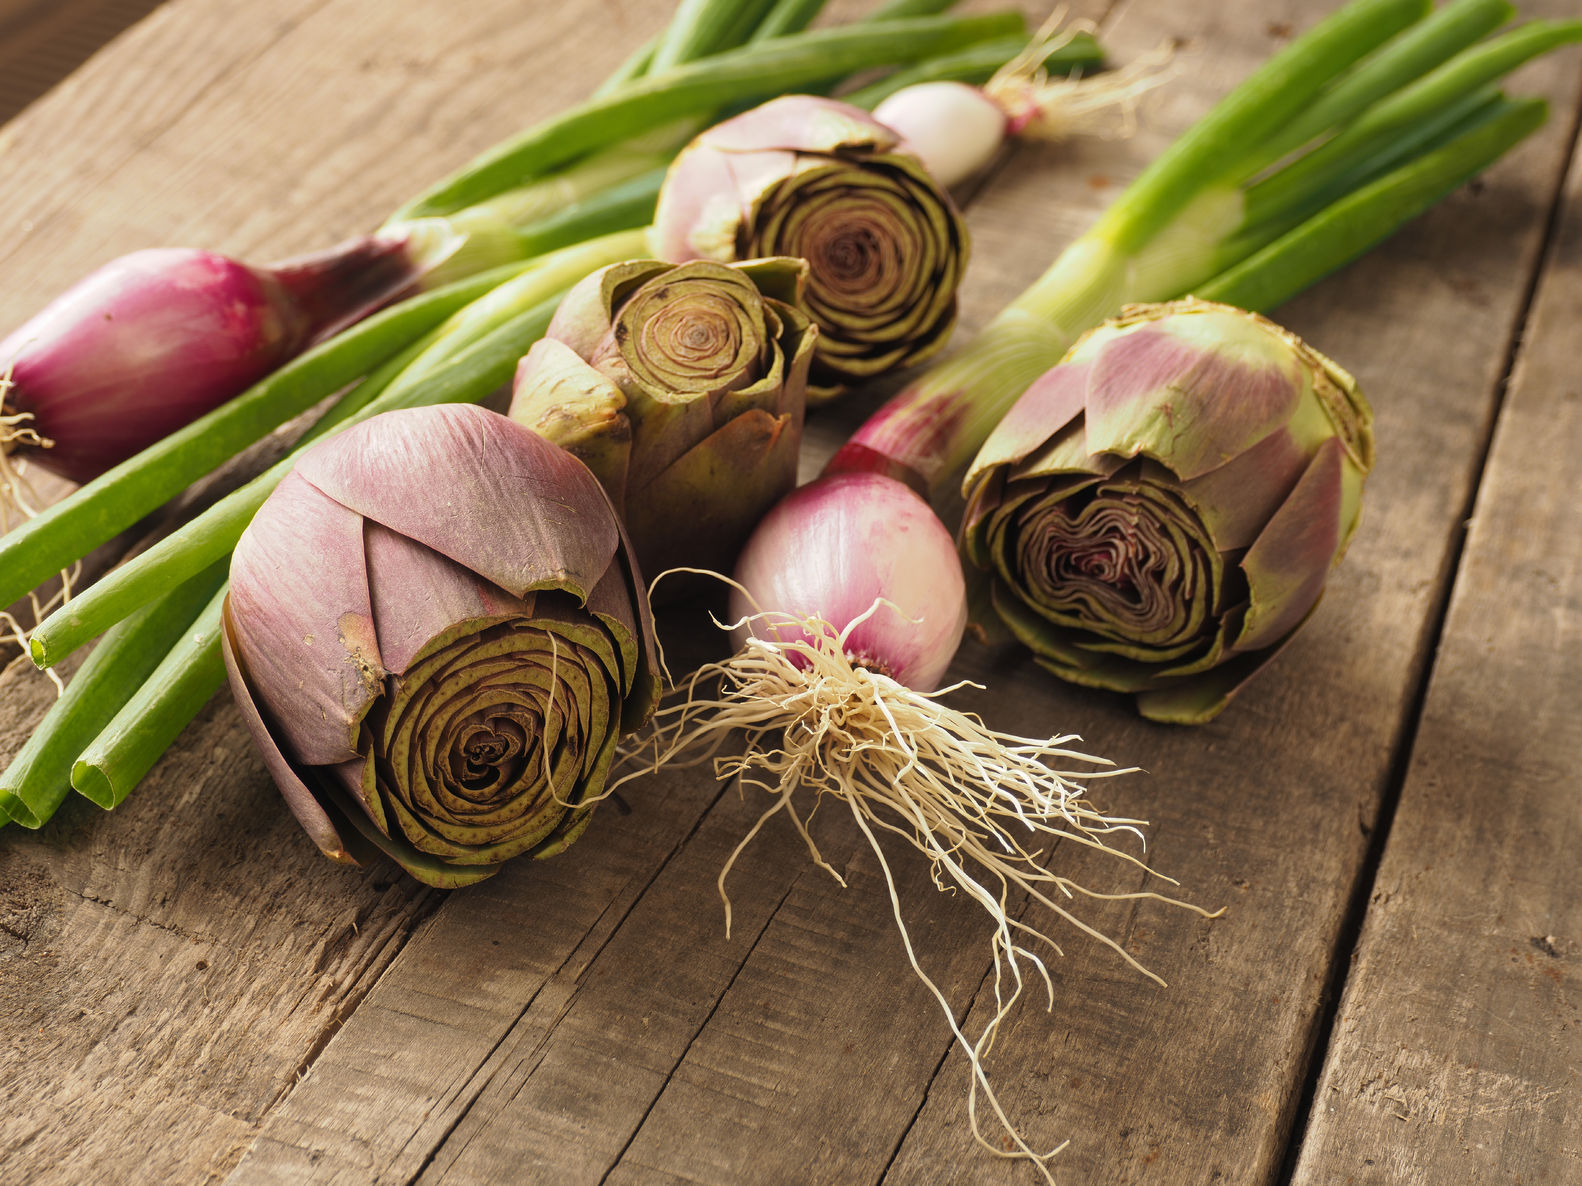 Onions and artichokes